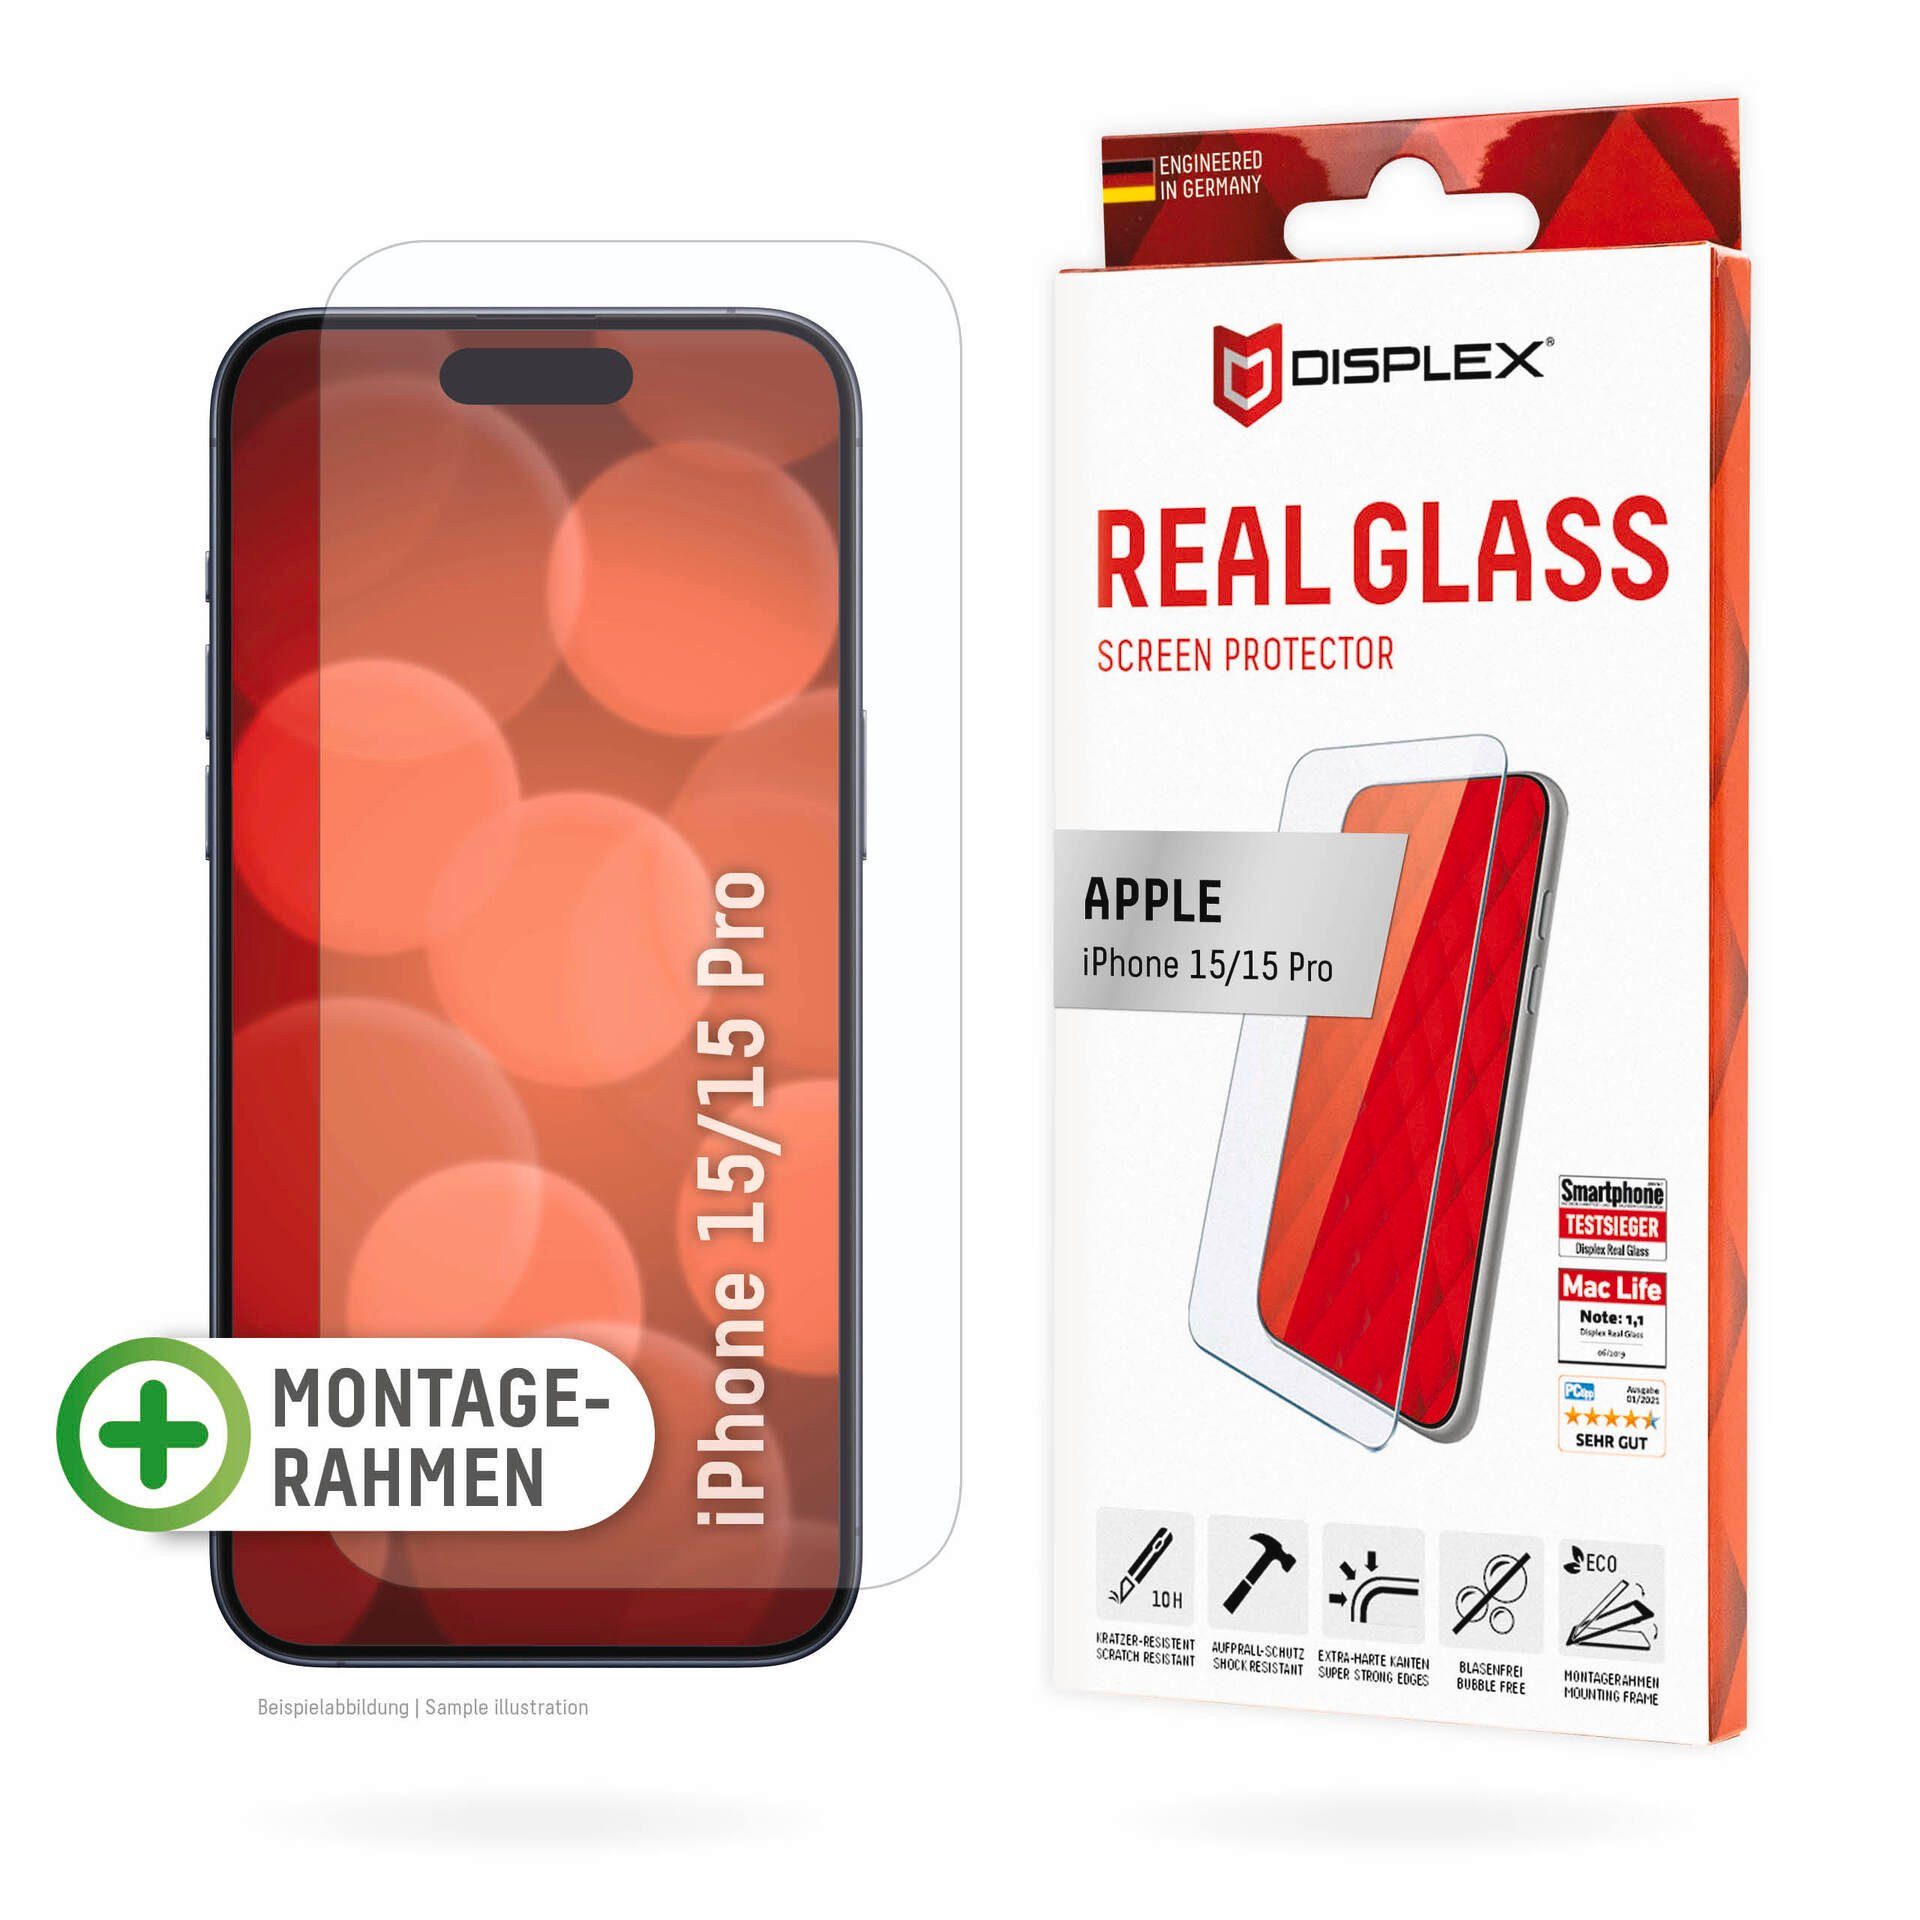 Displex Real Glass für Apple iPhone 15, Apple iPhone 15 Pro, Displayschutzglas, Displayschutzfolie Displayschutz kratzer-resistent 10H splitterfest